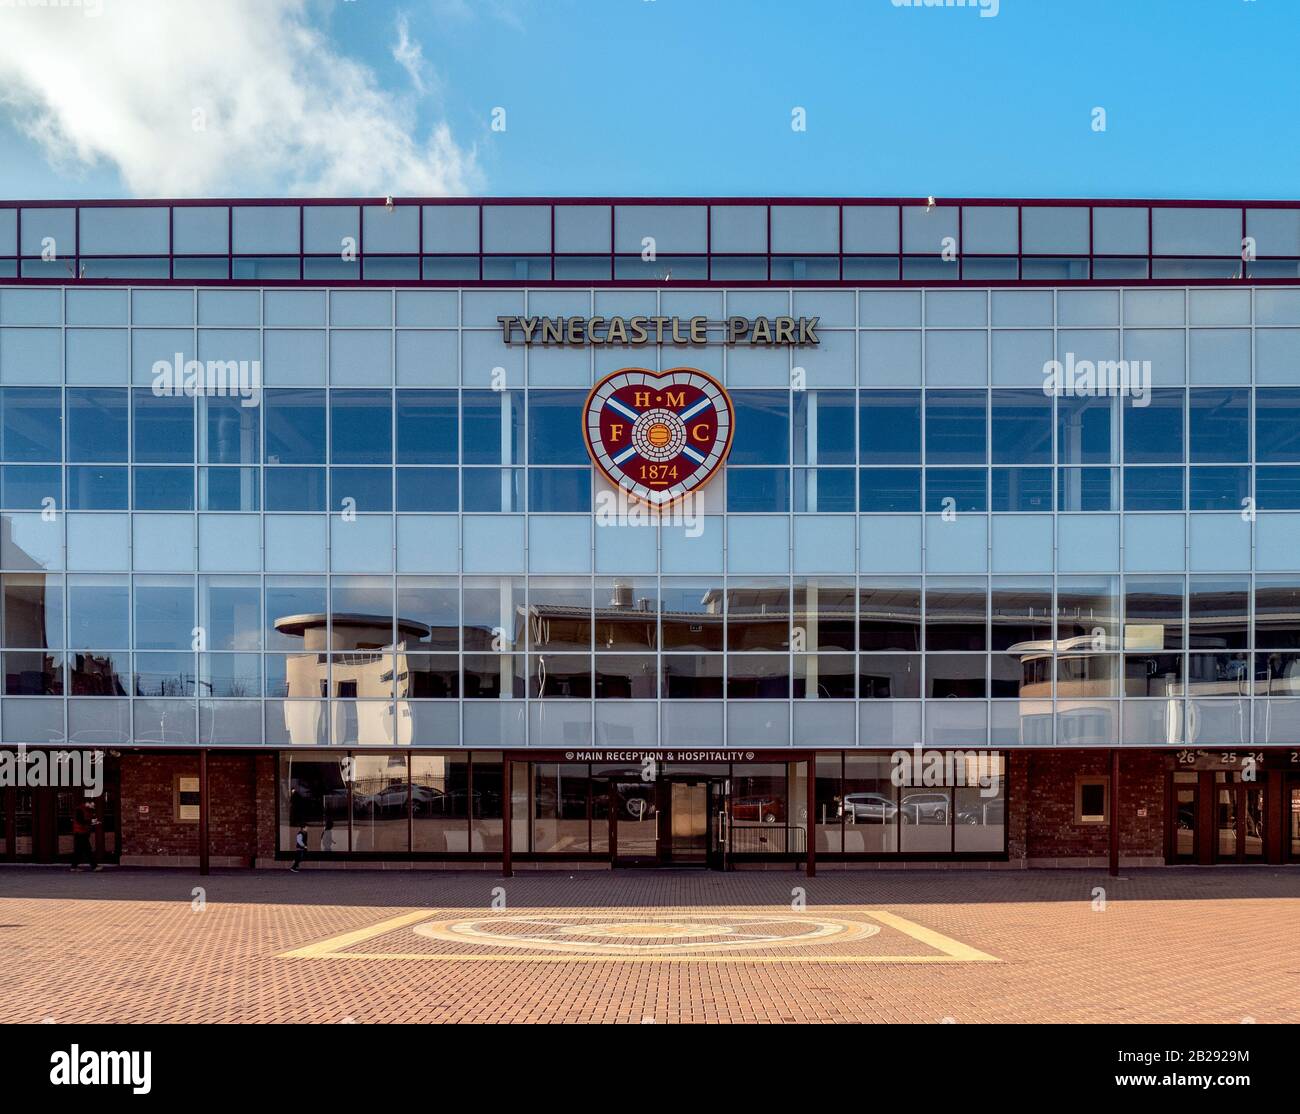 Tynecastle Stadium, home of Heart of Midlothian Football club, Edinburgh, Scotland, UK. Stock Photo